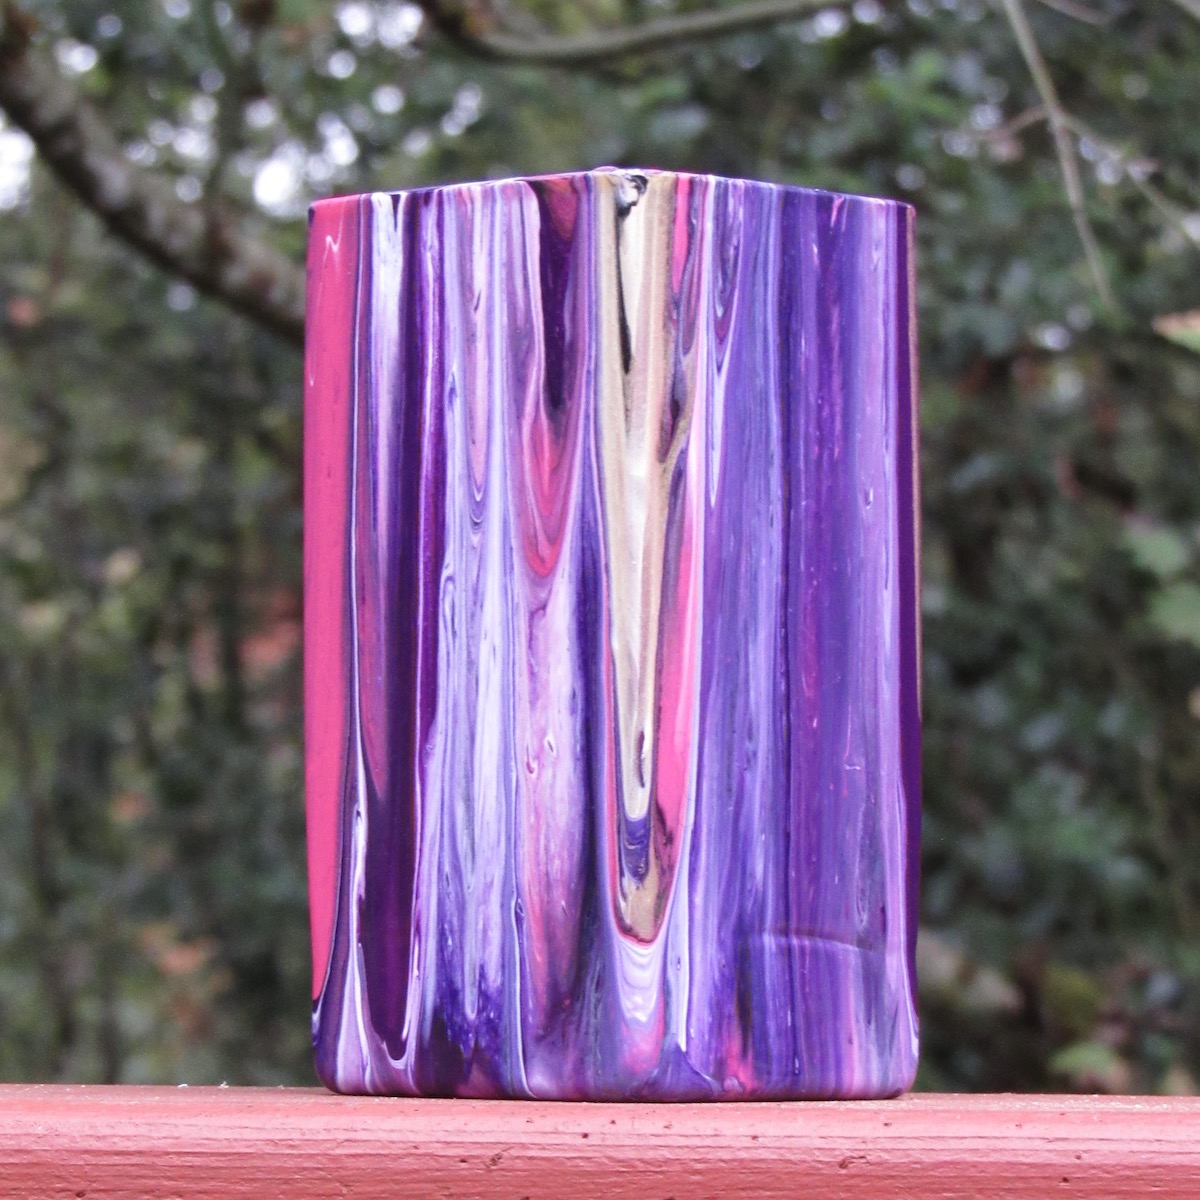 Pink and purple vase